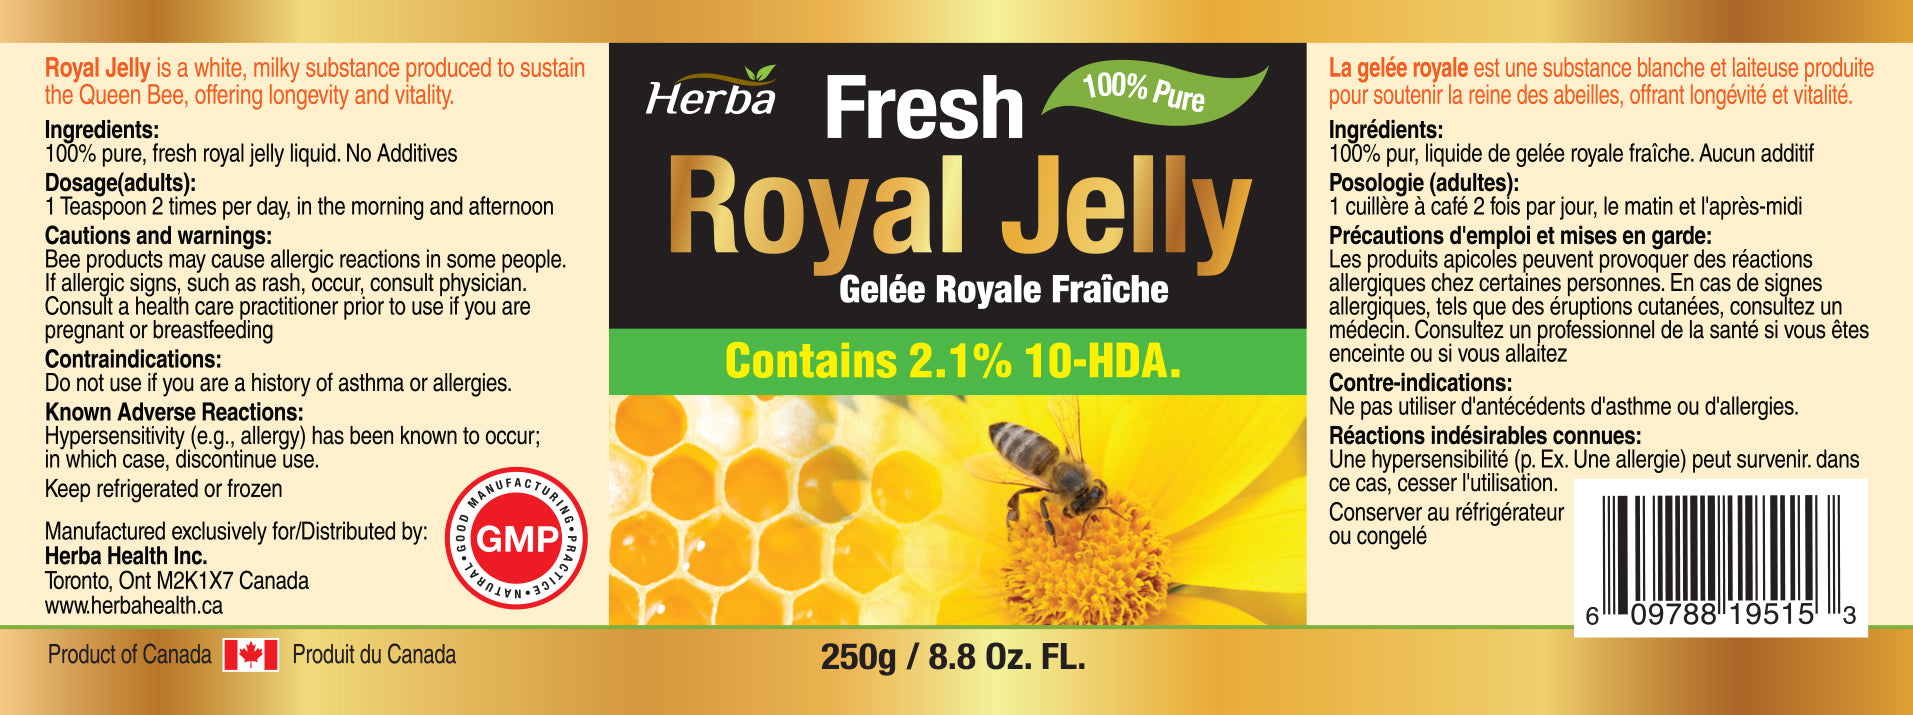 Herba Fresh Royal Jelly-250g-Antioxidant-Support Vitality, Hormonal Regulation and Immunity -100% Natural